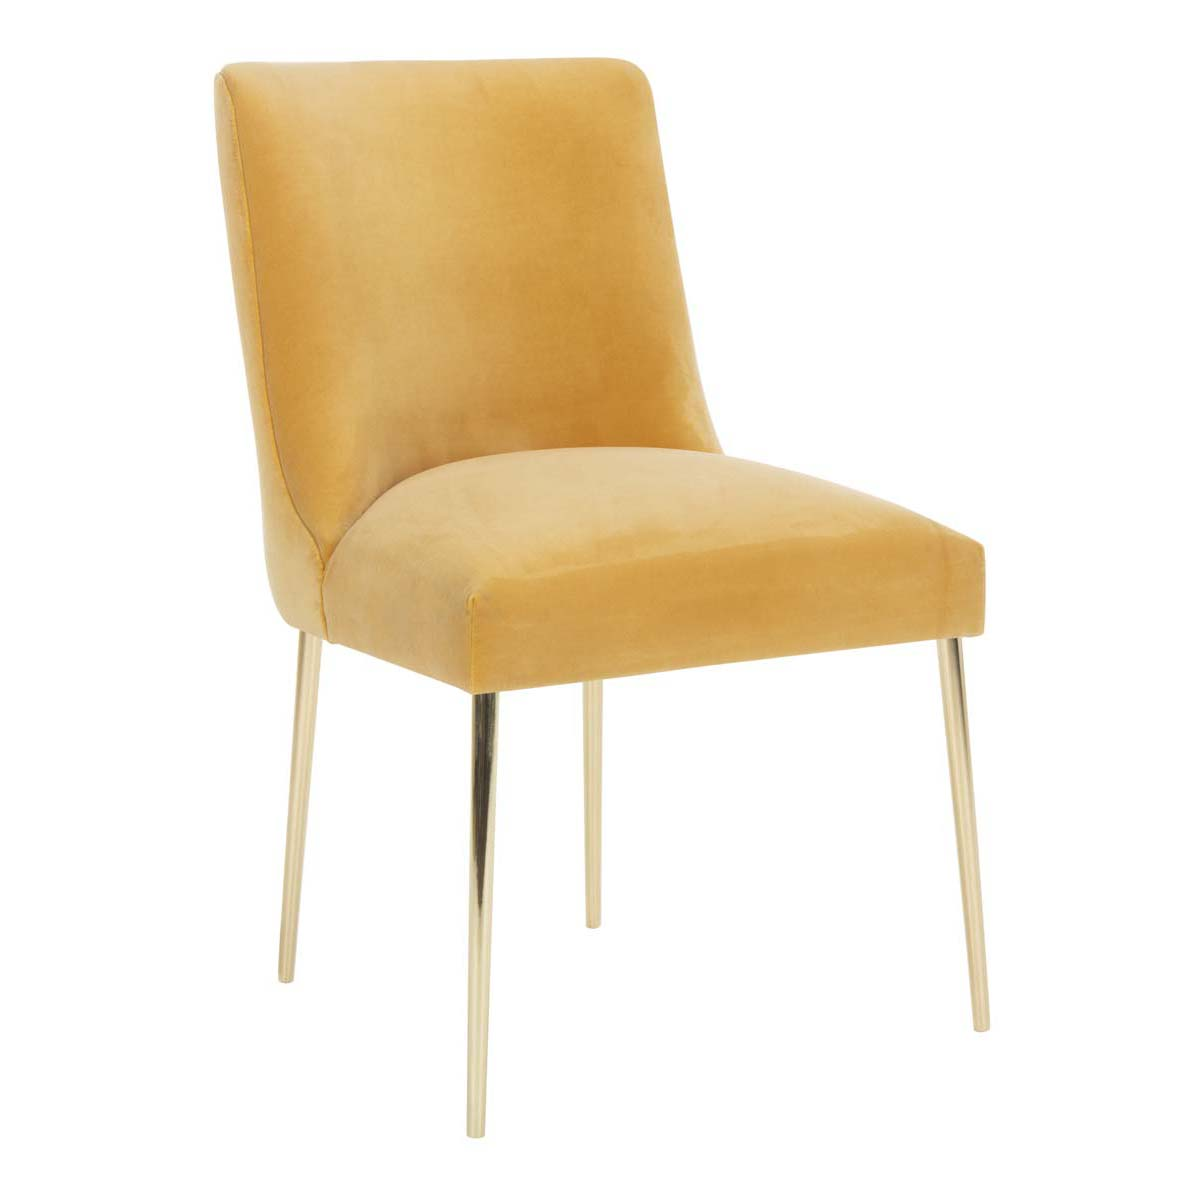 Safavieh Couture Nolita Dining Chair - Mustard